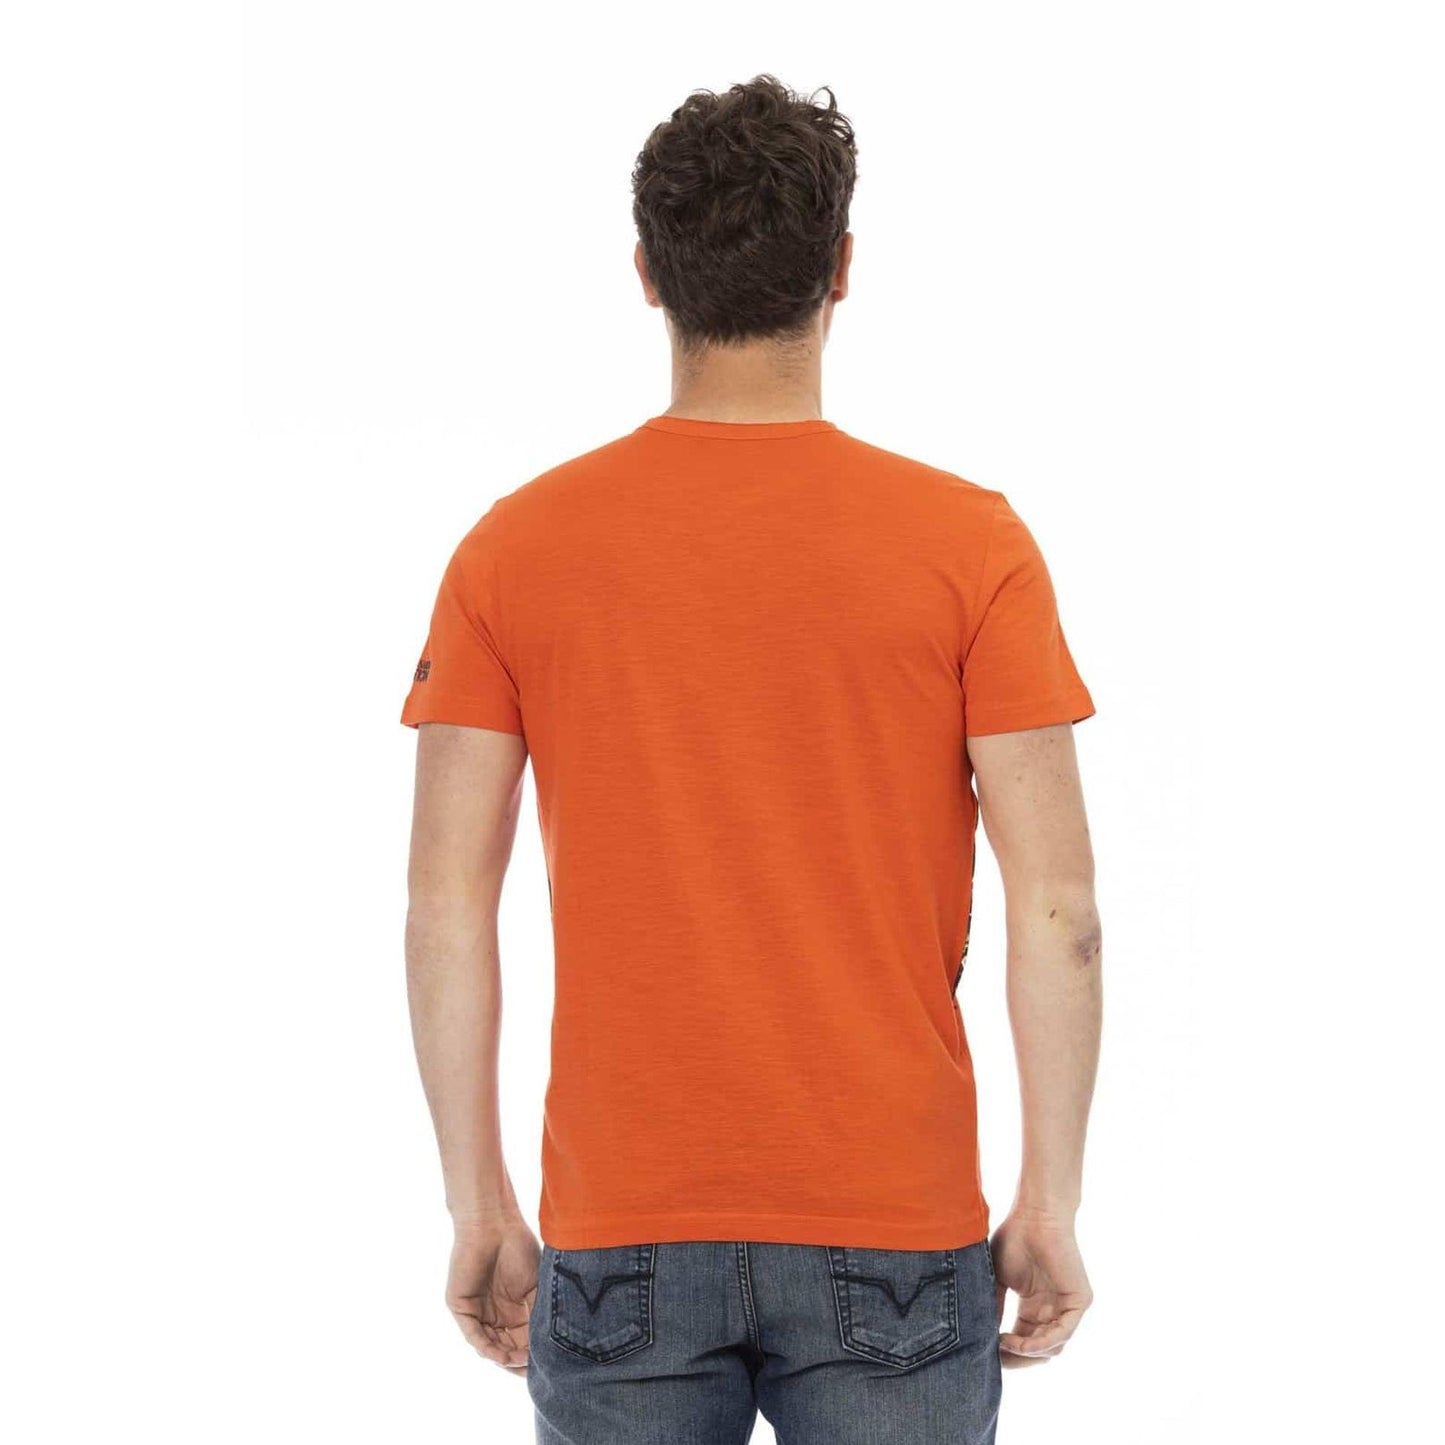 Trussardi Action Men T-shirts - Orange Brand T-shirts - T-Shirt - Guocali